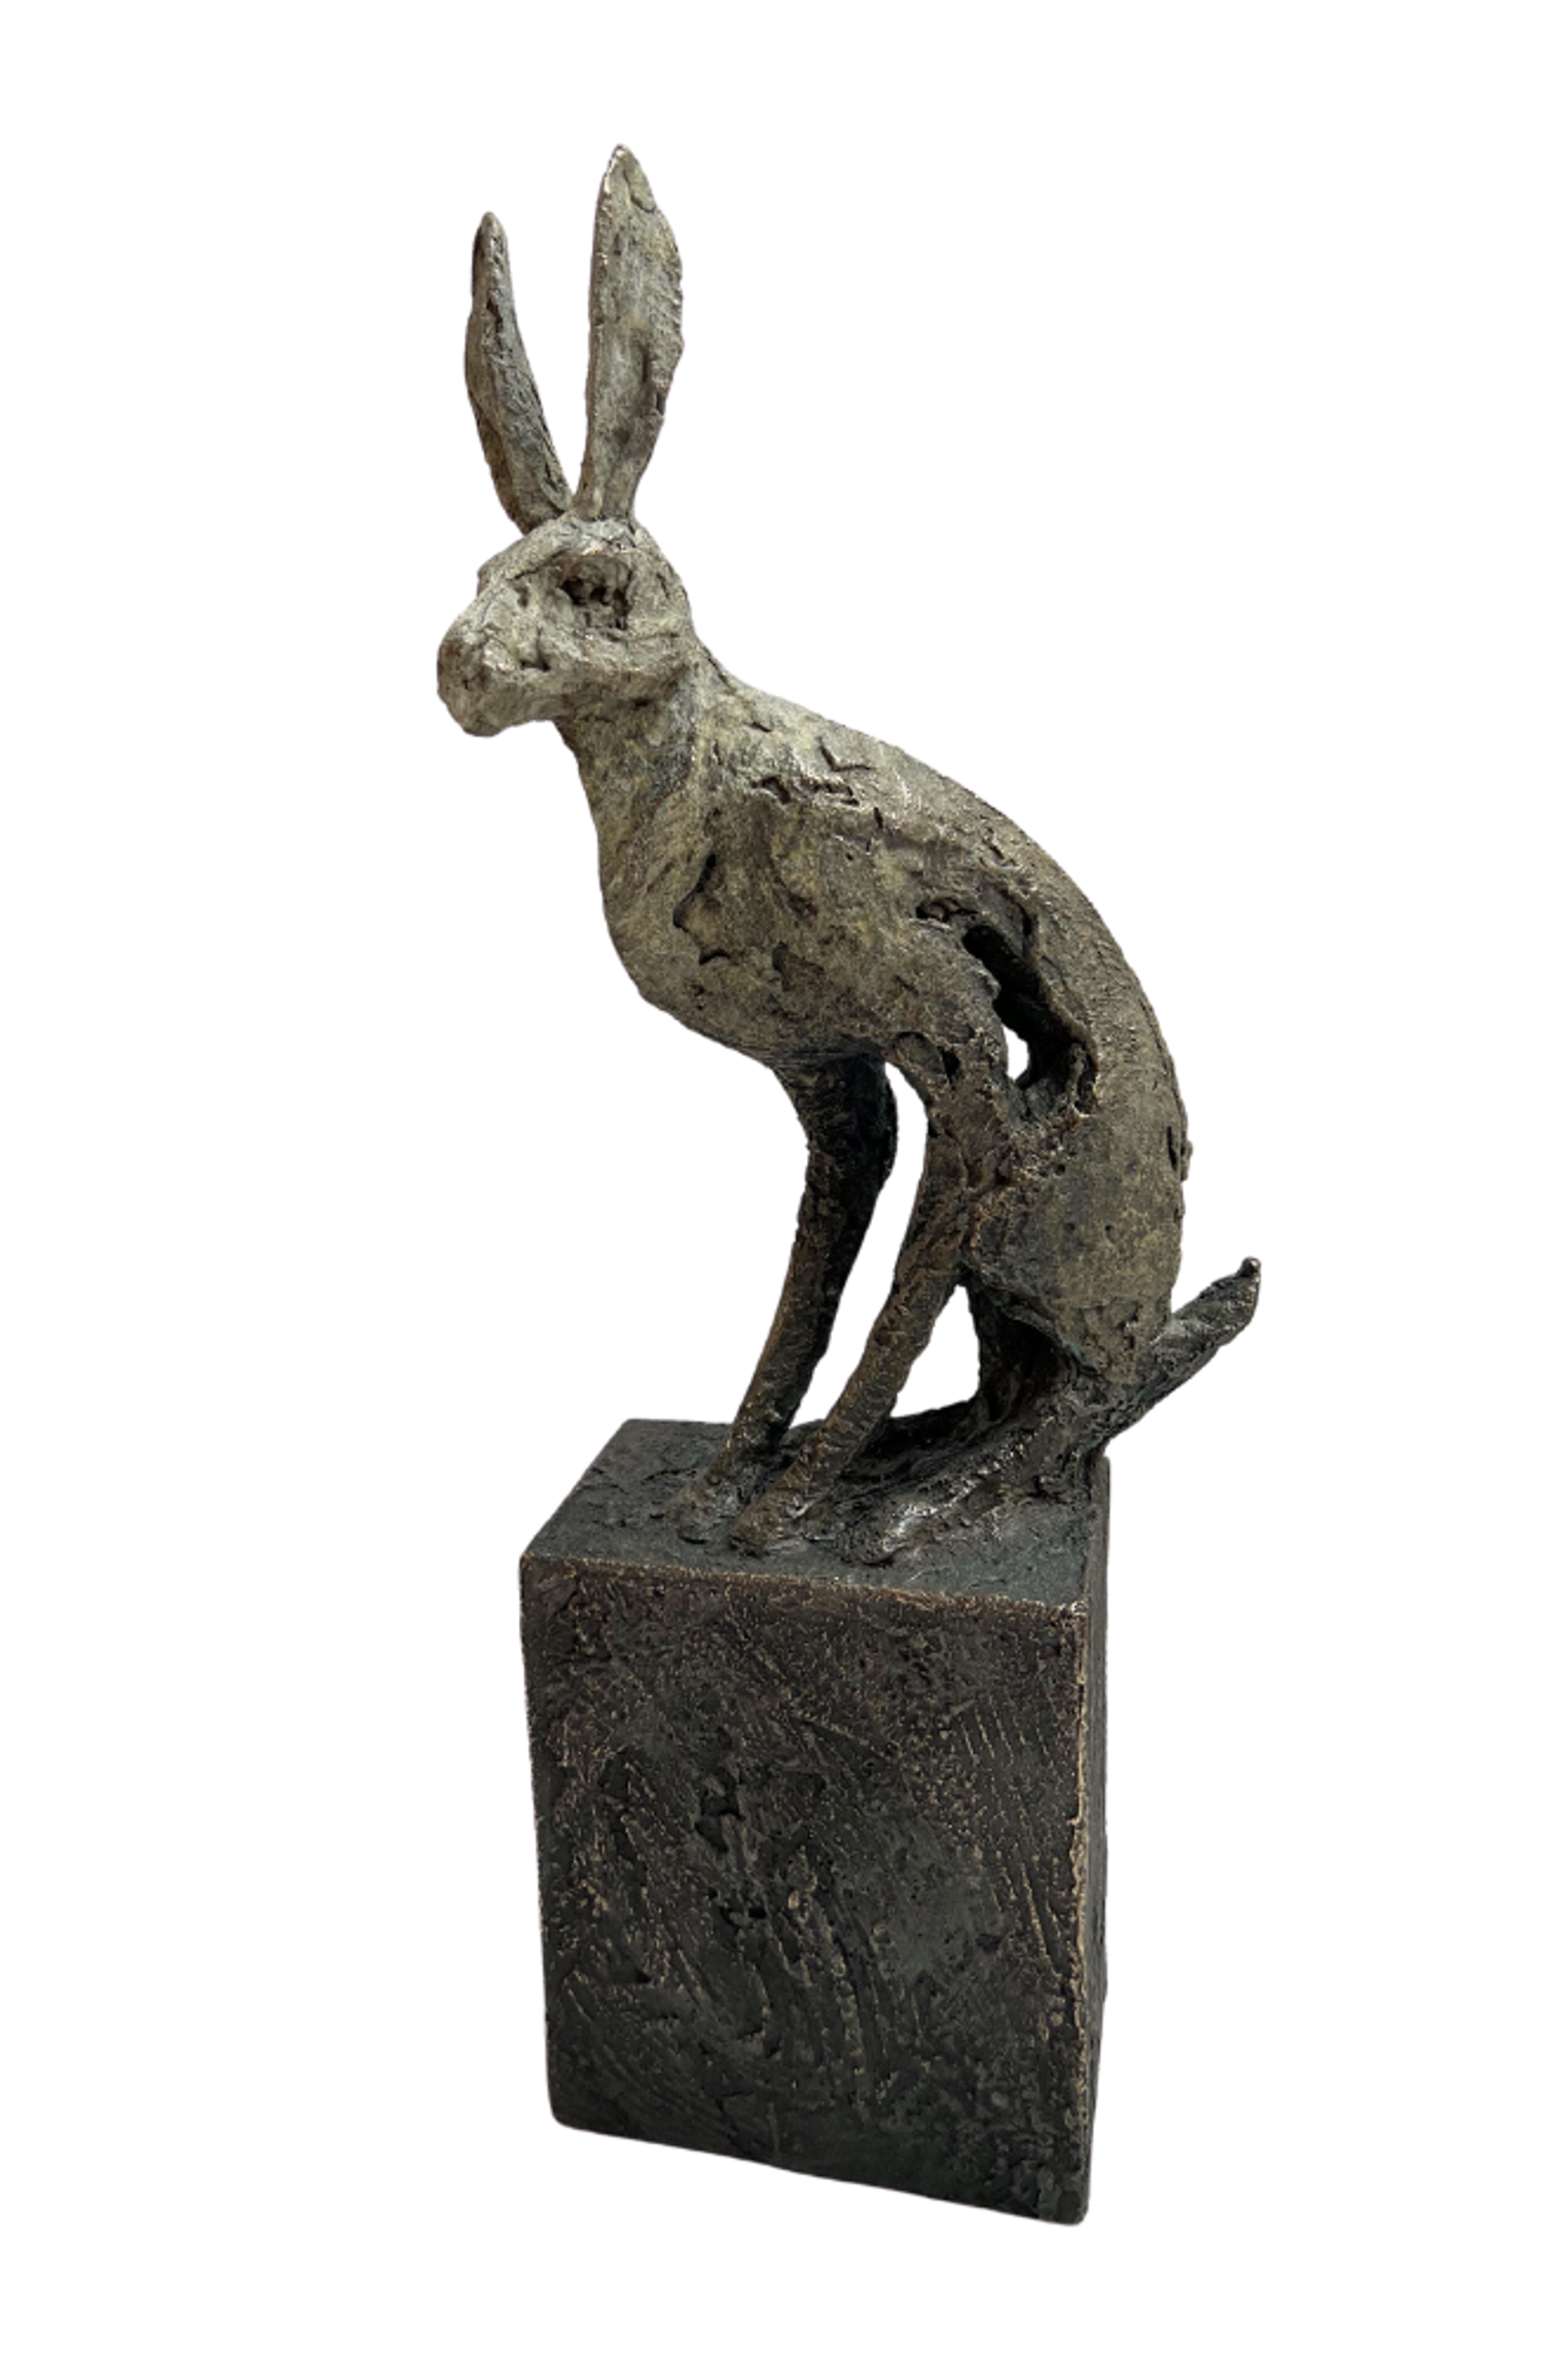 The Jack Rabbit by Gustavo Torres